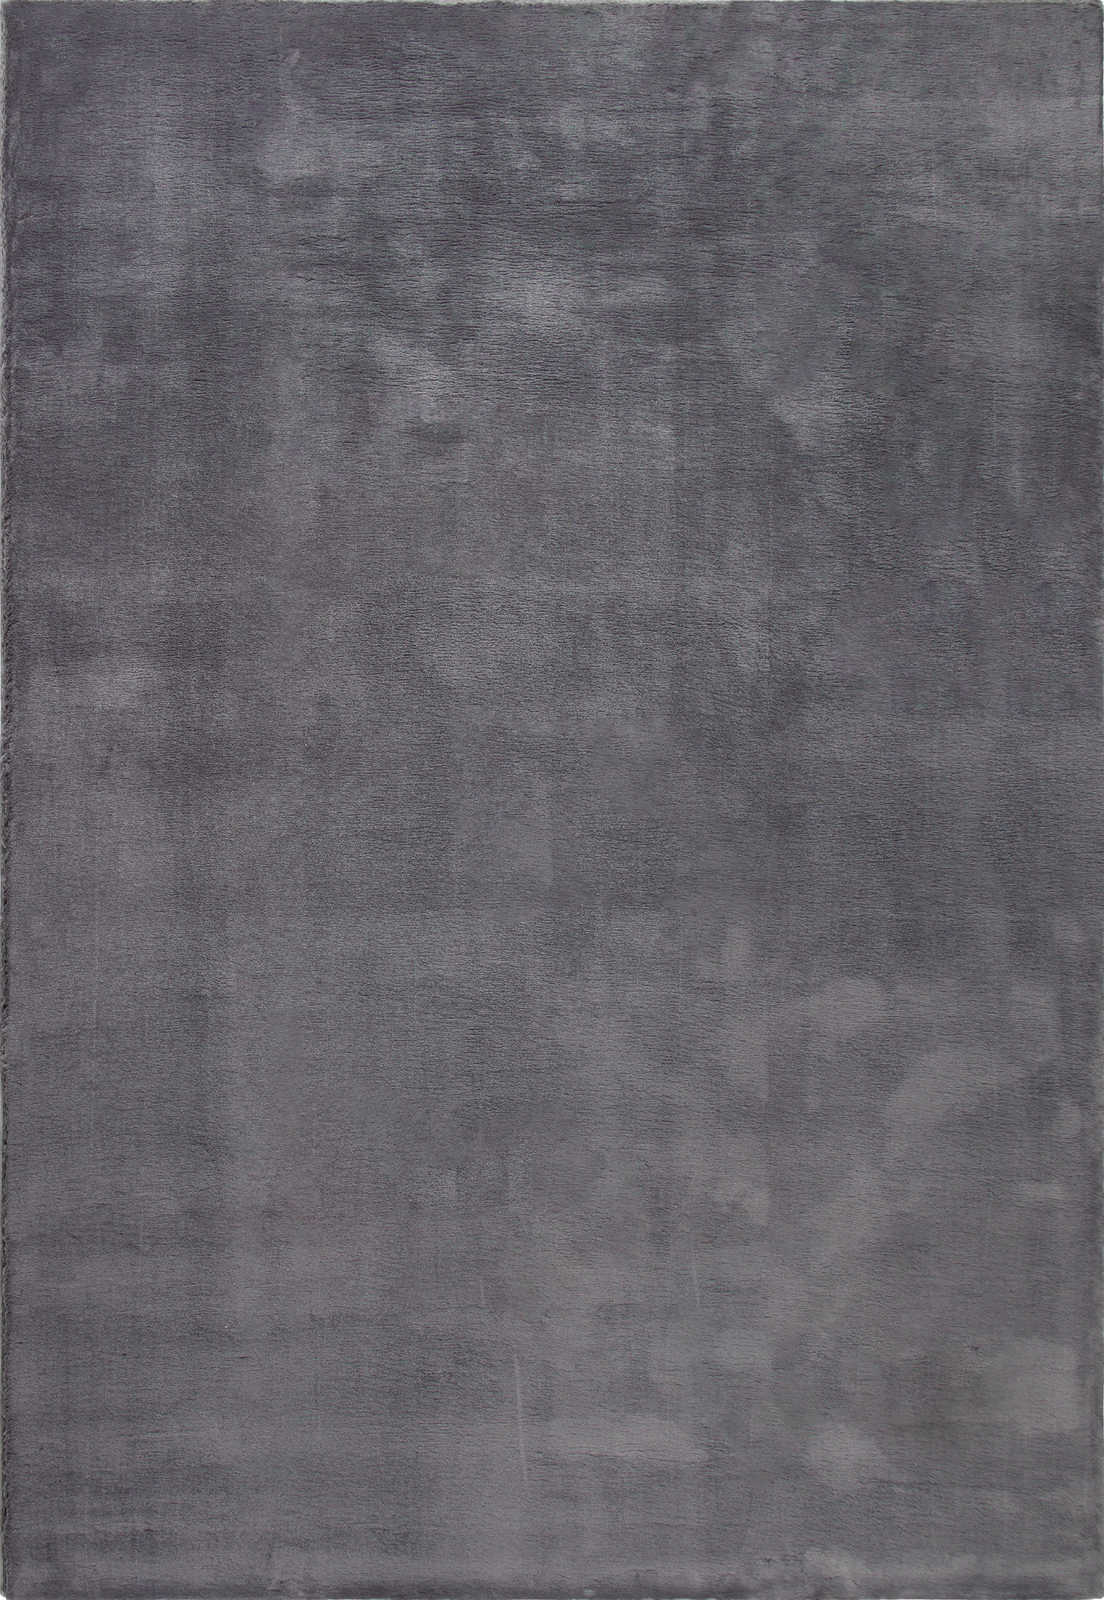             Tapis moderne à poils longs anthracite - 290 x 200 cm
        